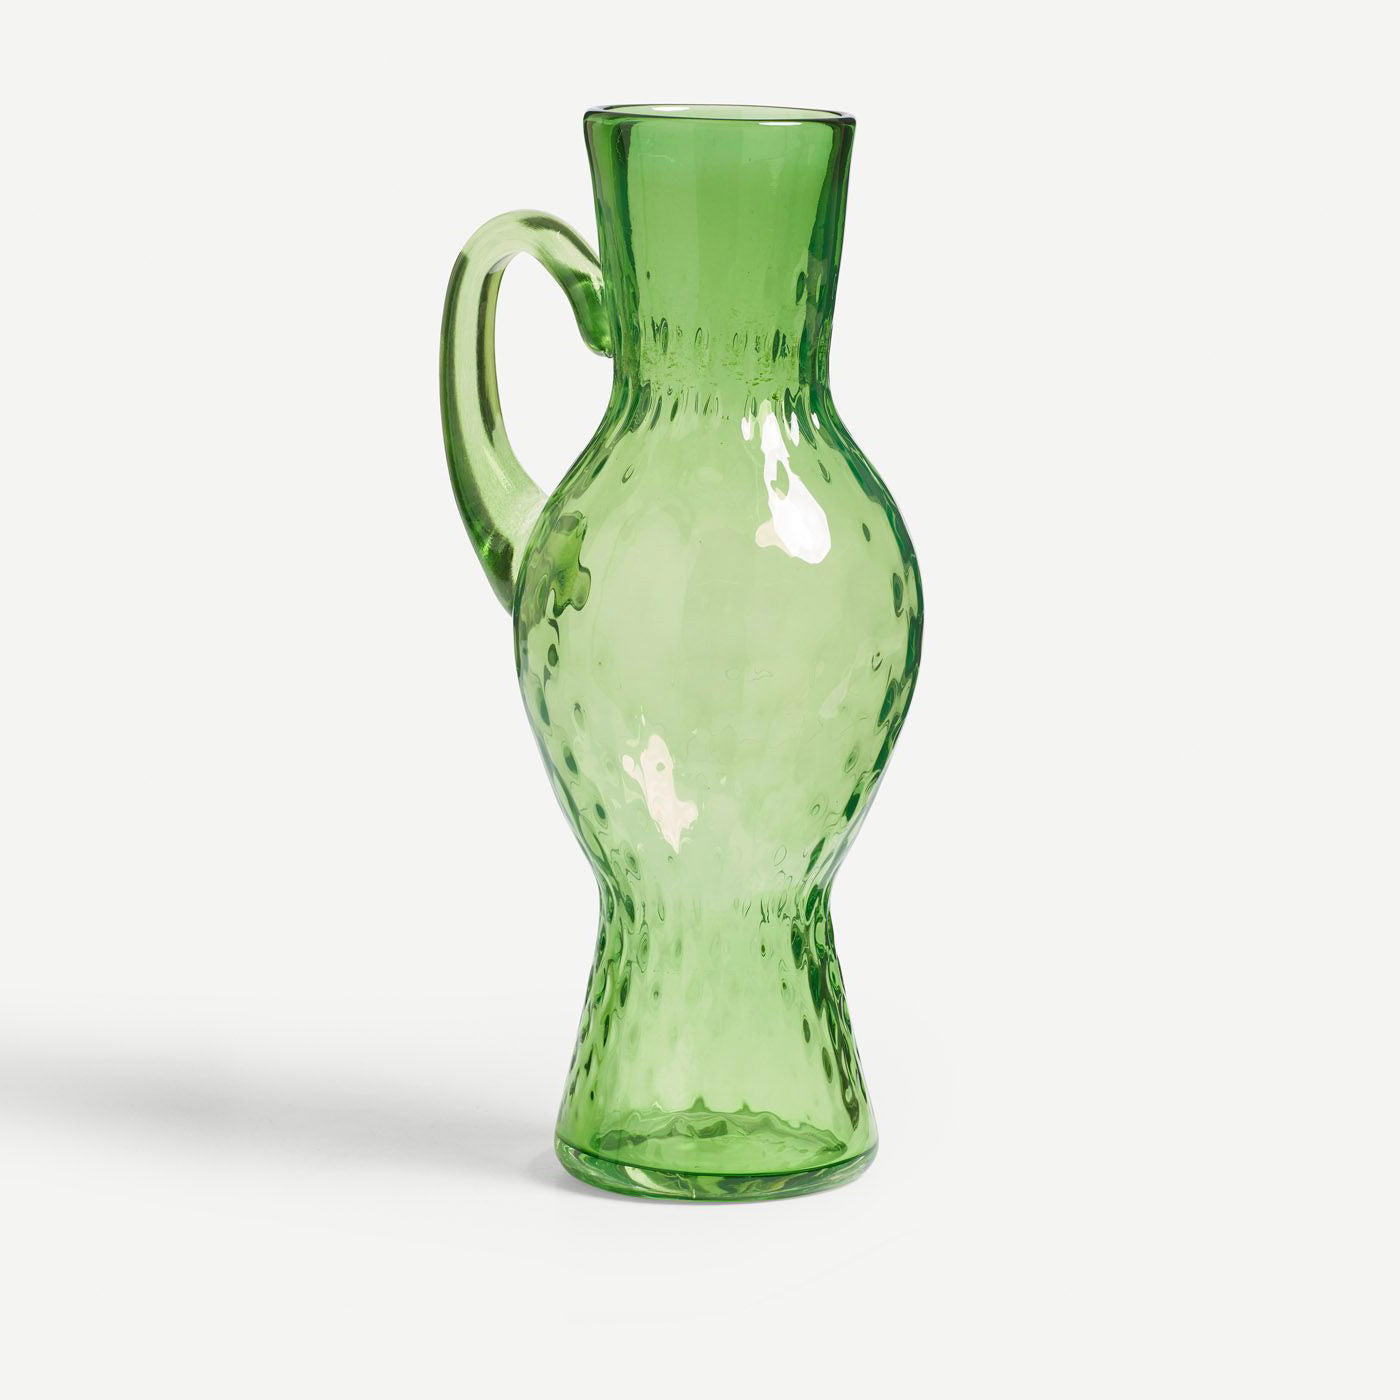 Tall bright green glass vase